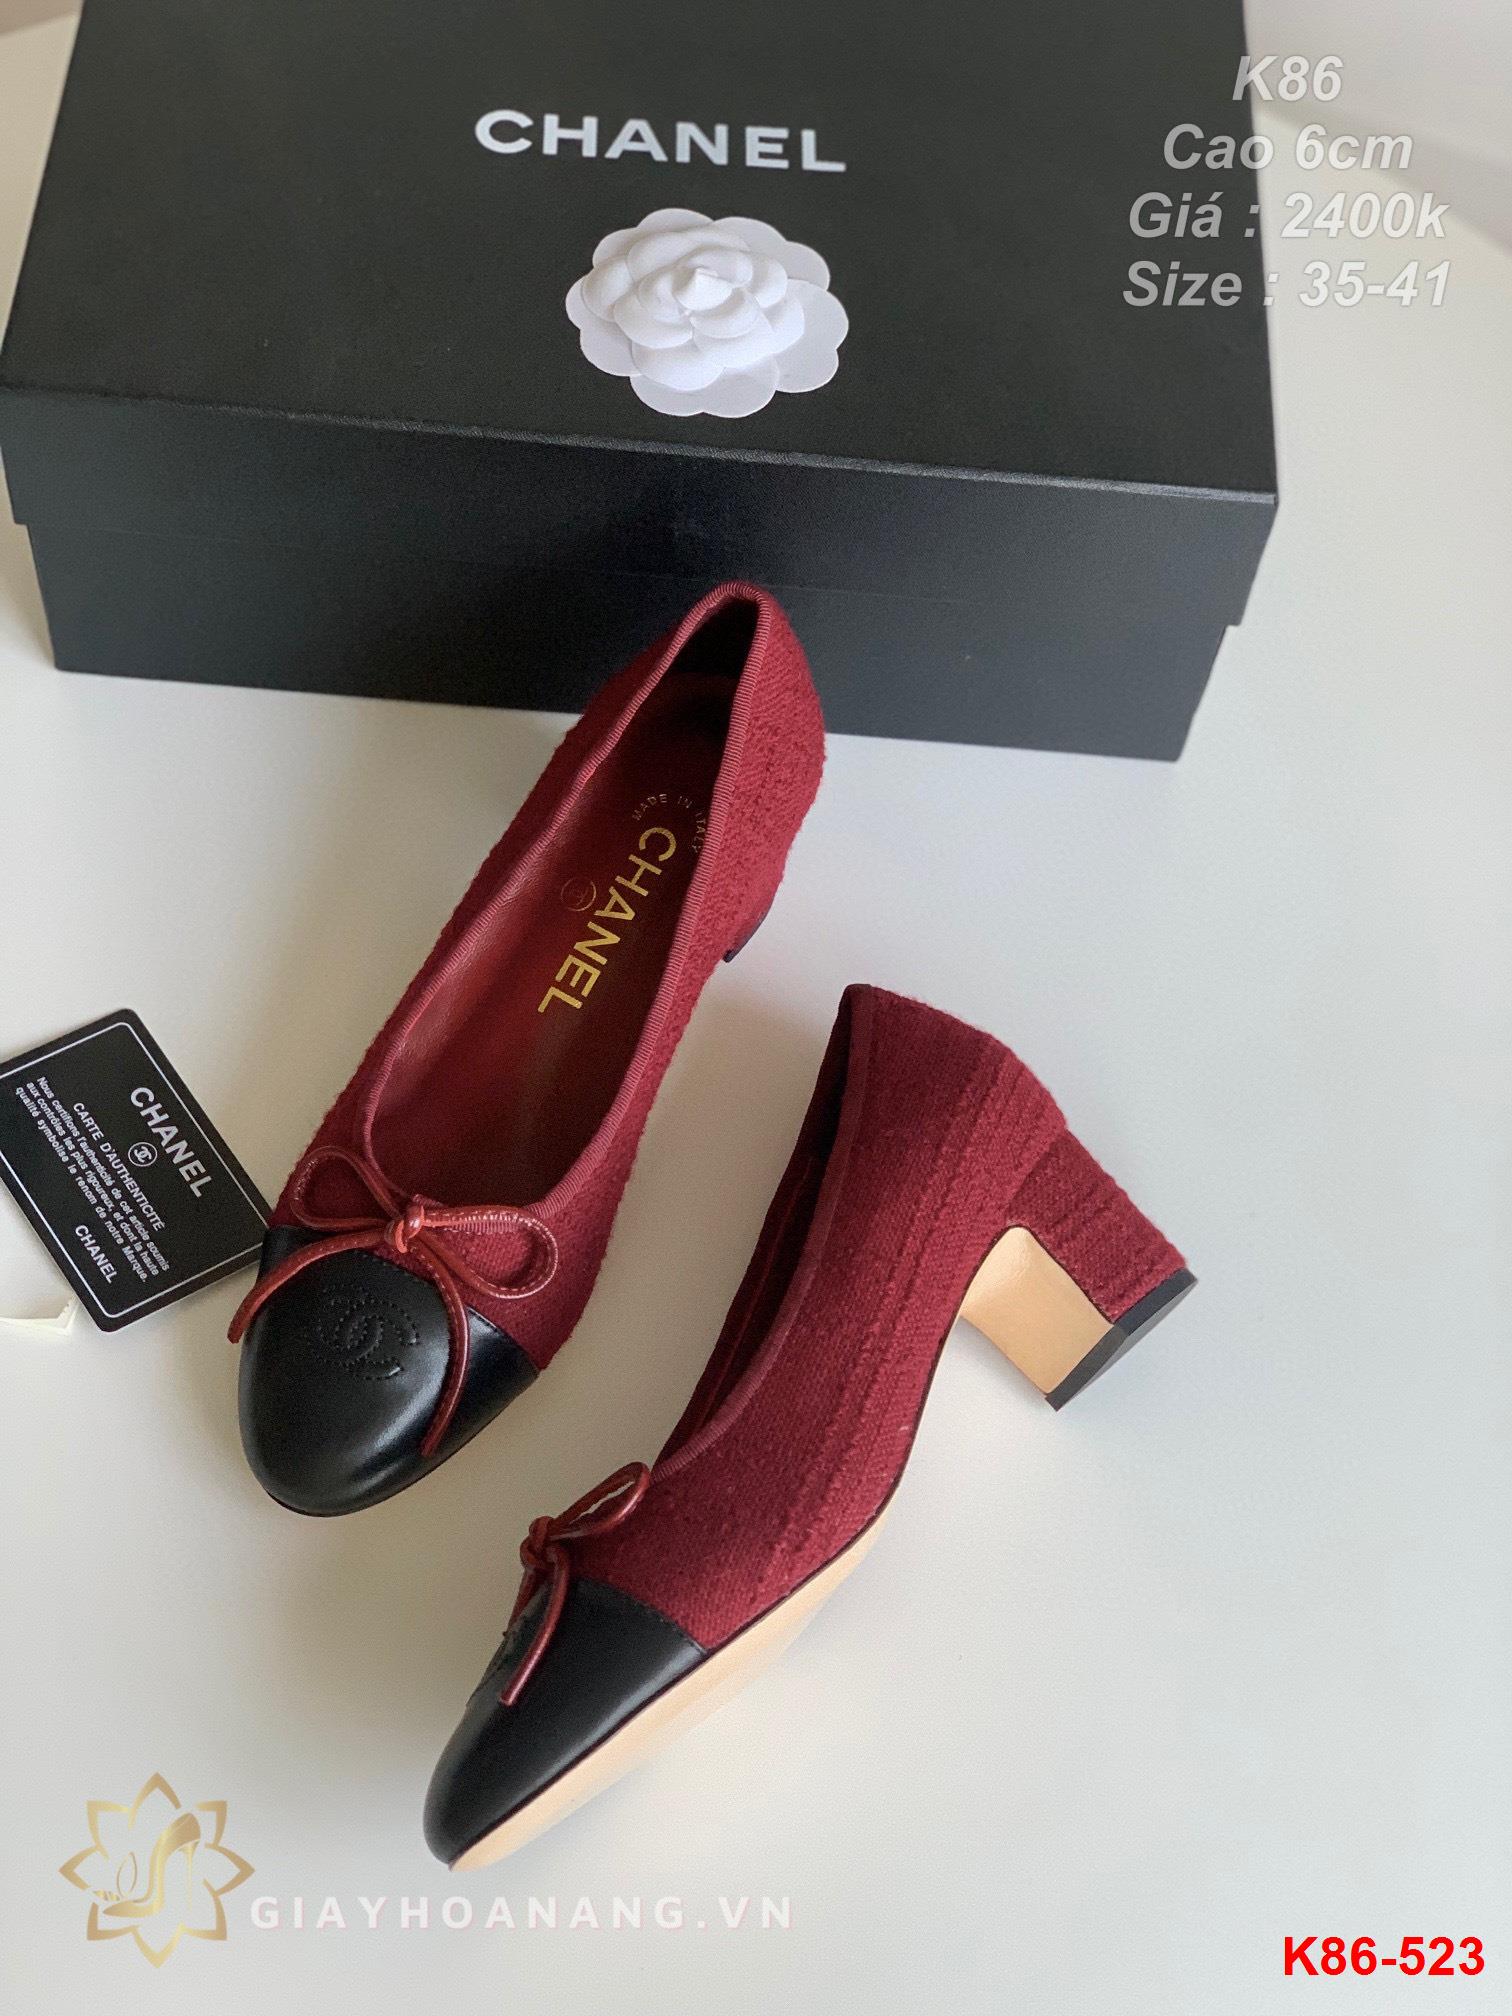 K86-523 Chanel giày cao 6cm siêu cấp